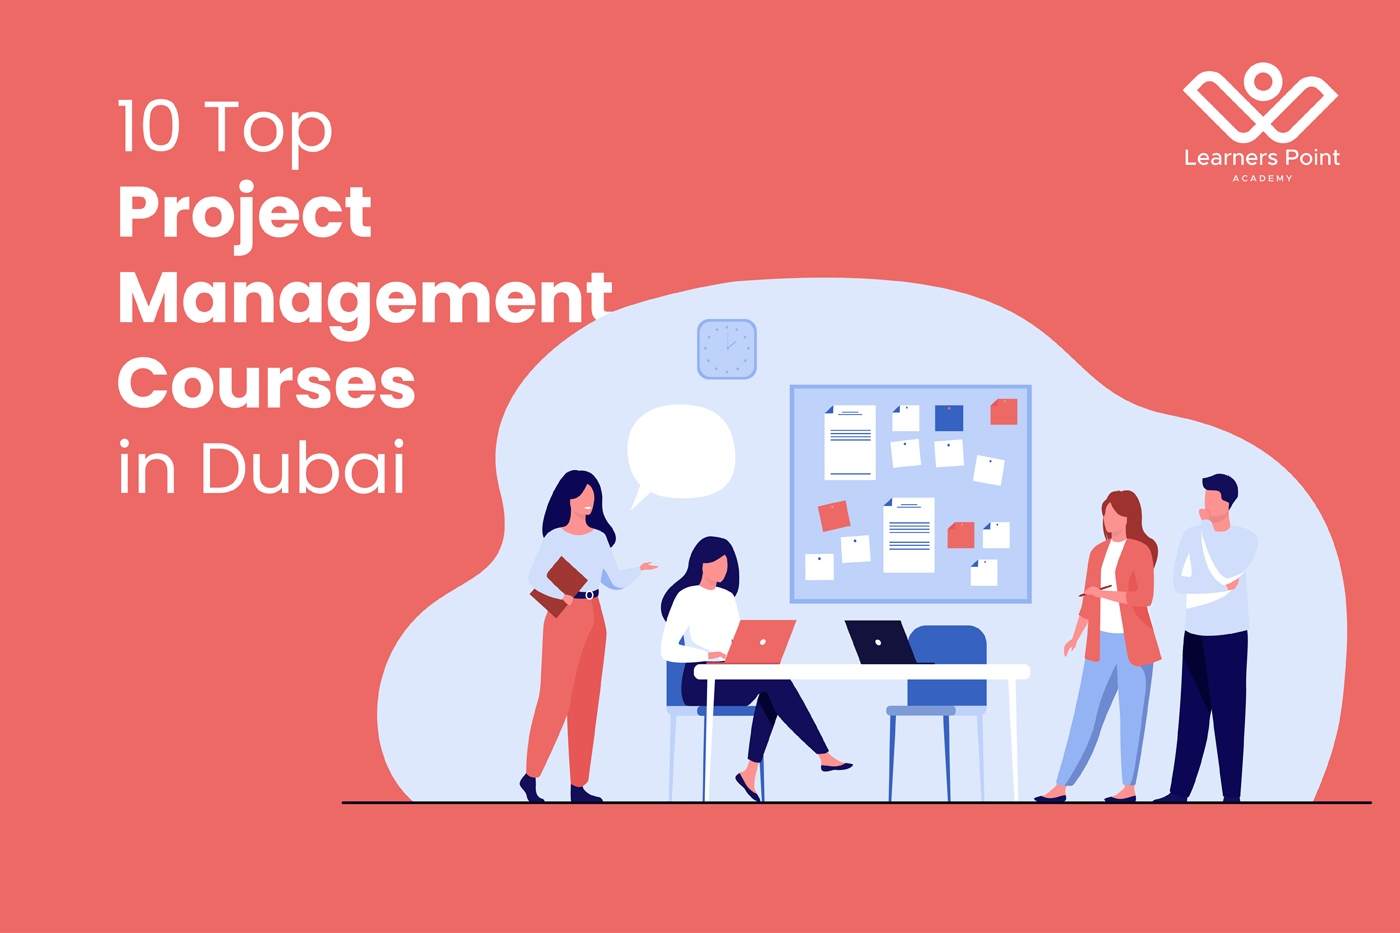 10 Top Project Management Courses in Dubai